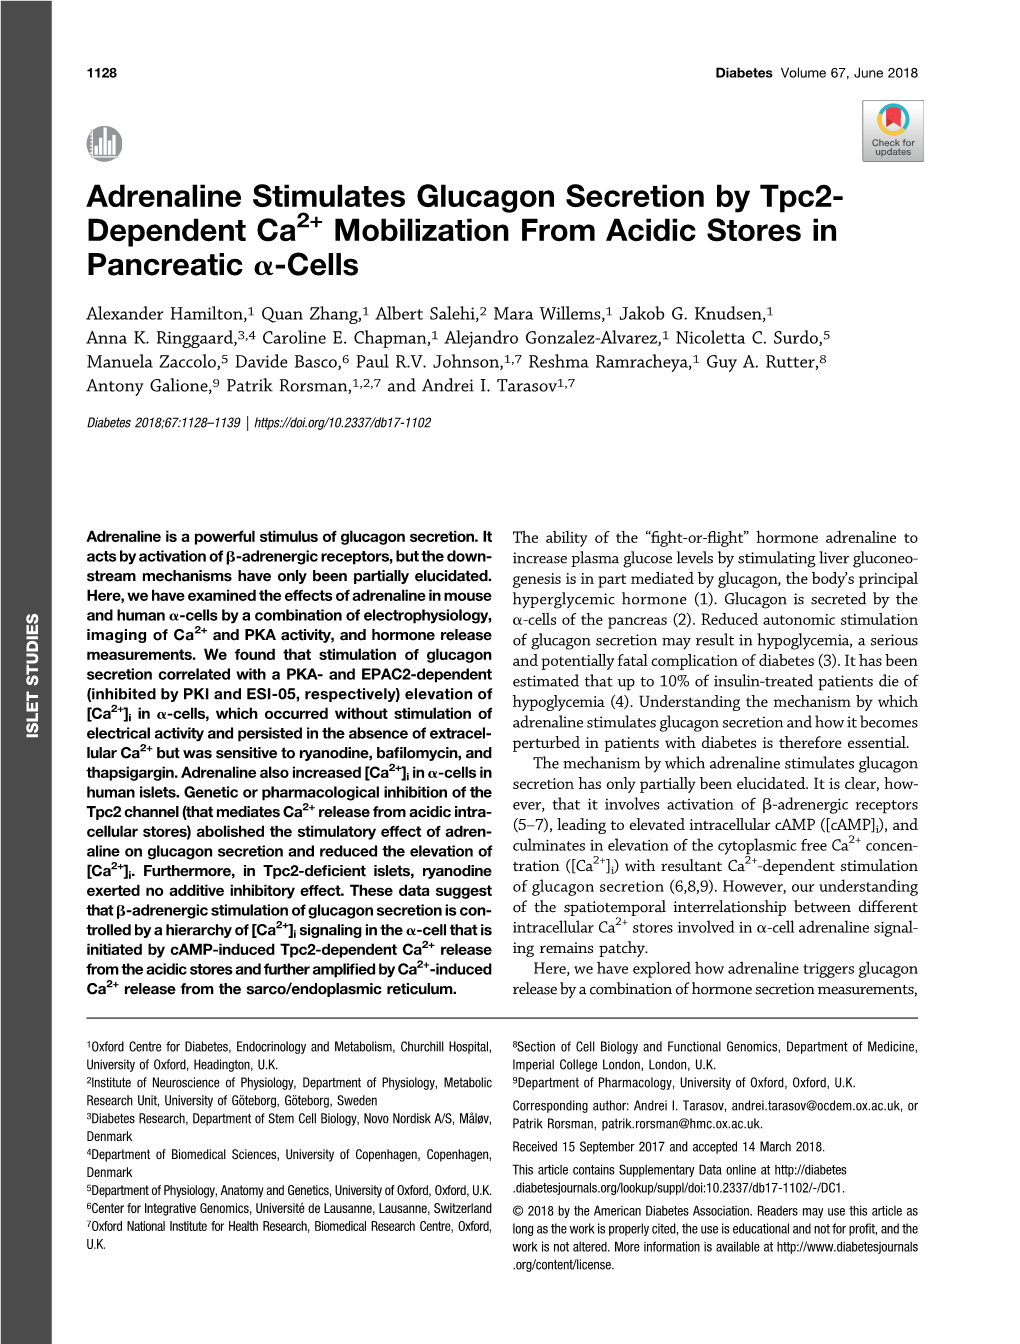 Adrenaline Stimulates Glucagon Secretion by Tpc2-Dependent